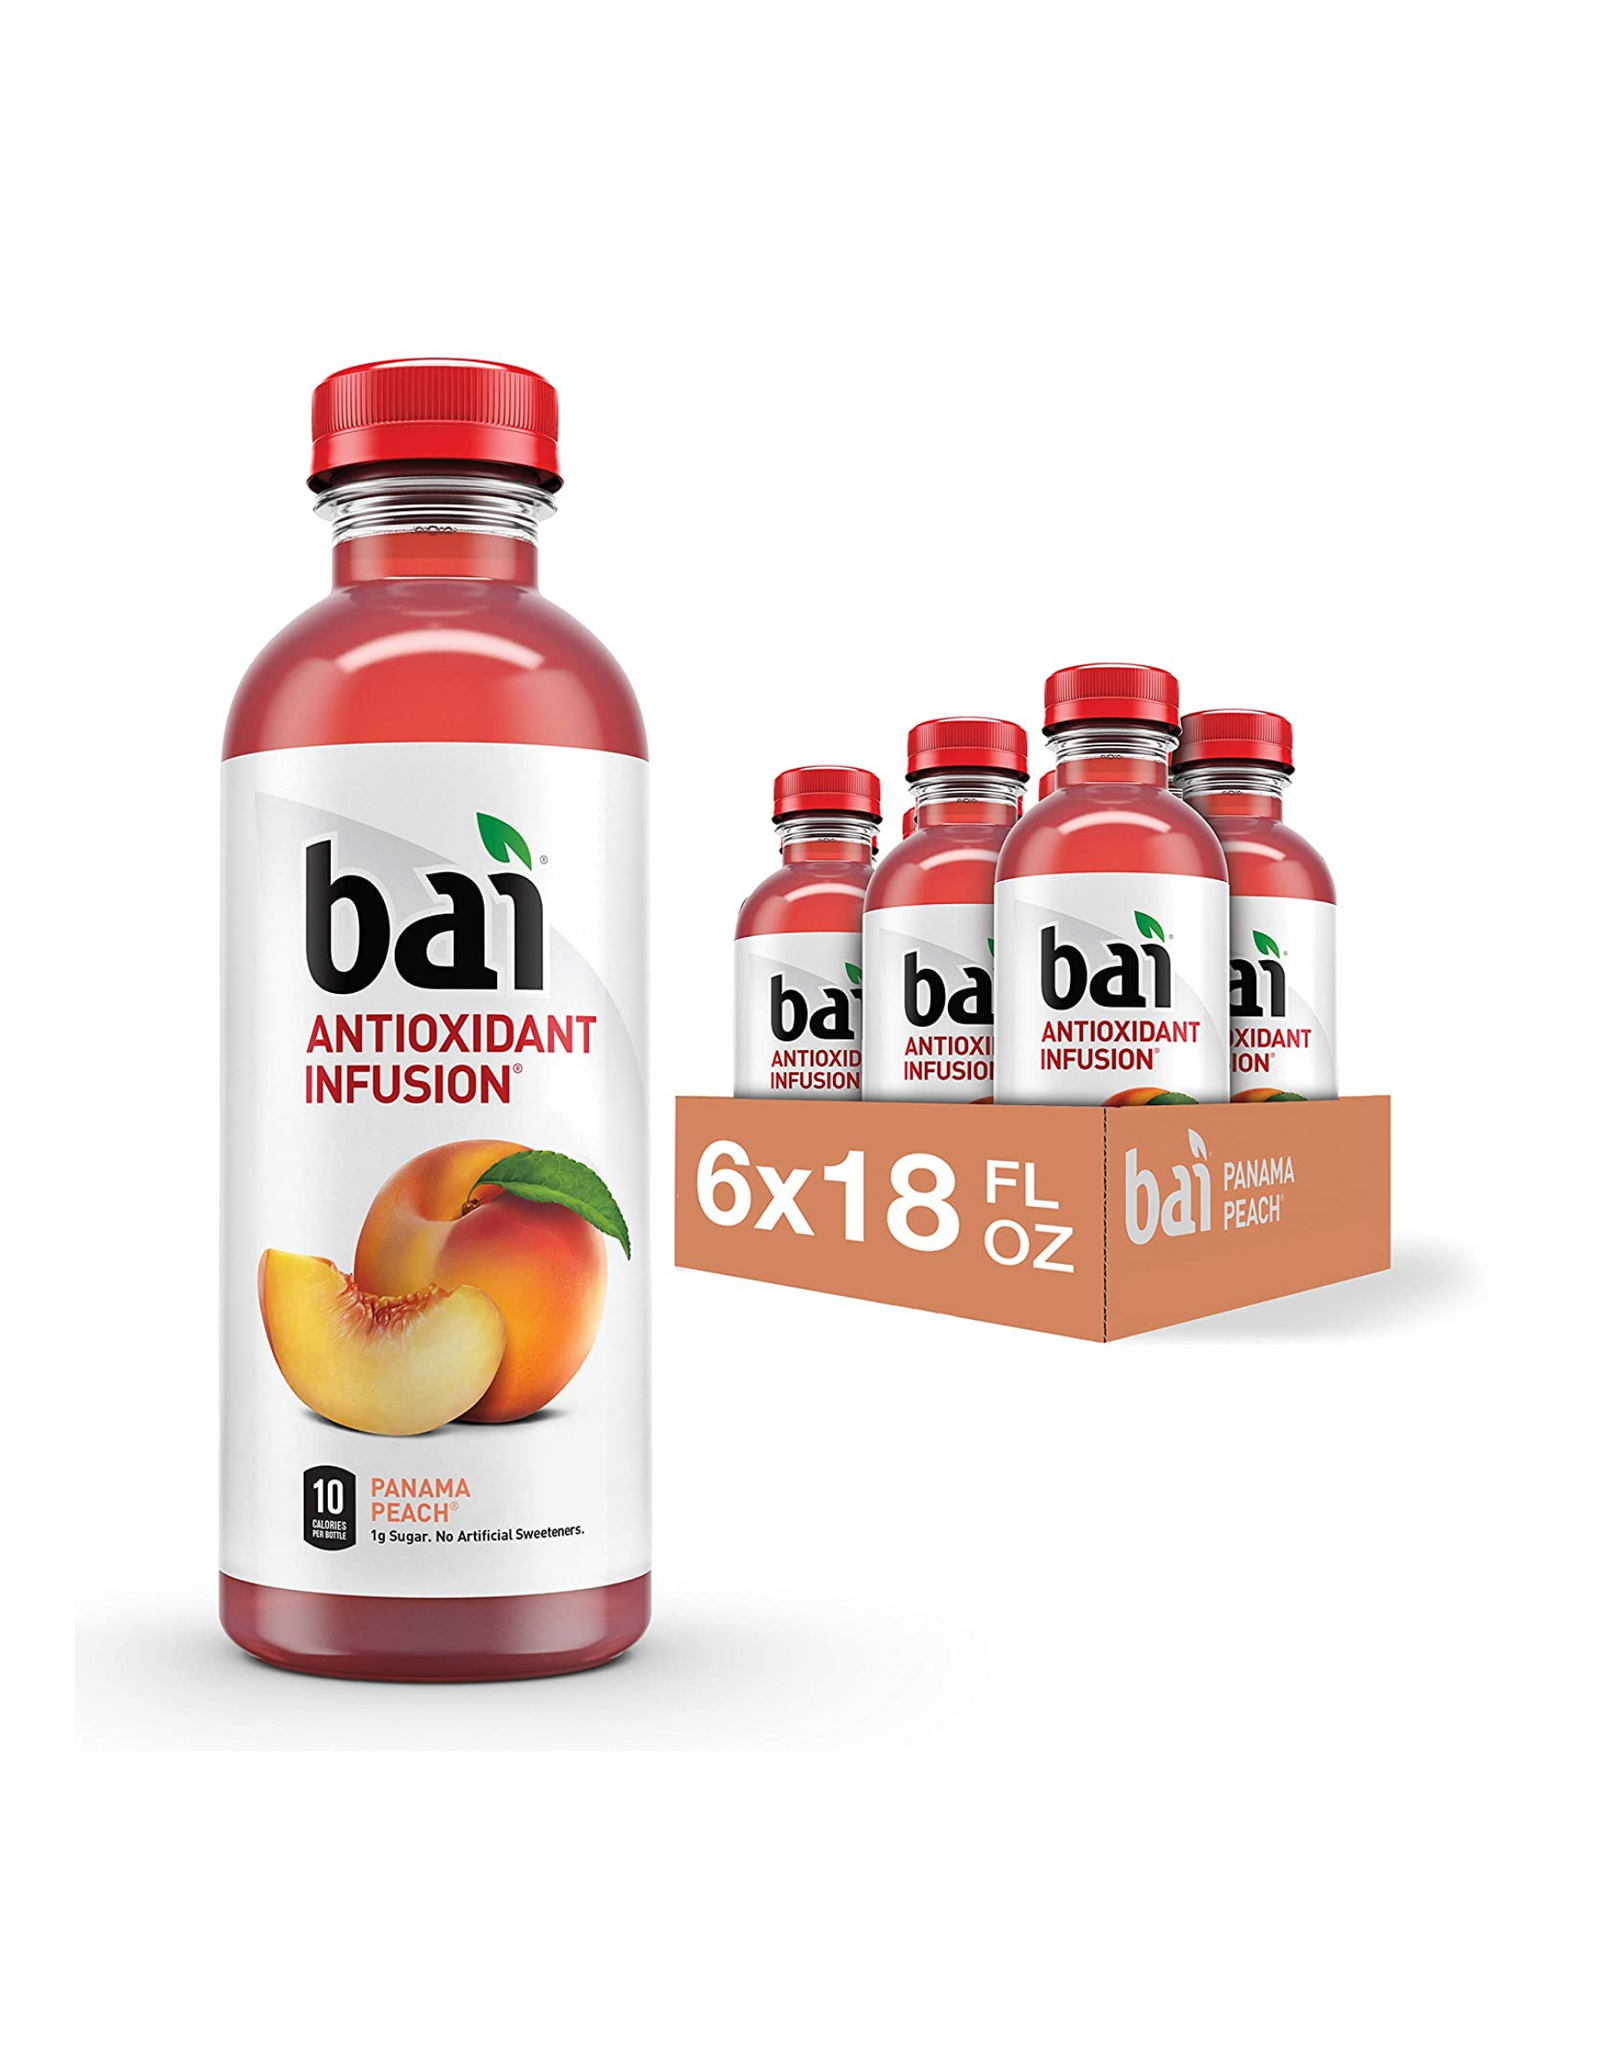 Bai Flavored Water, Panama Peach, Antioxidant Infusion Drinks, 18 fl oz (Pack of 6)